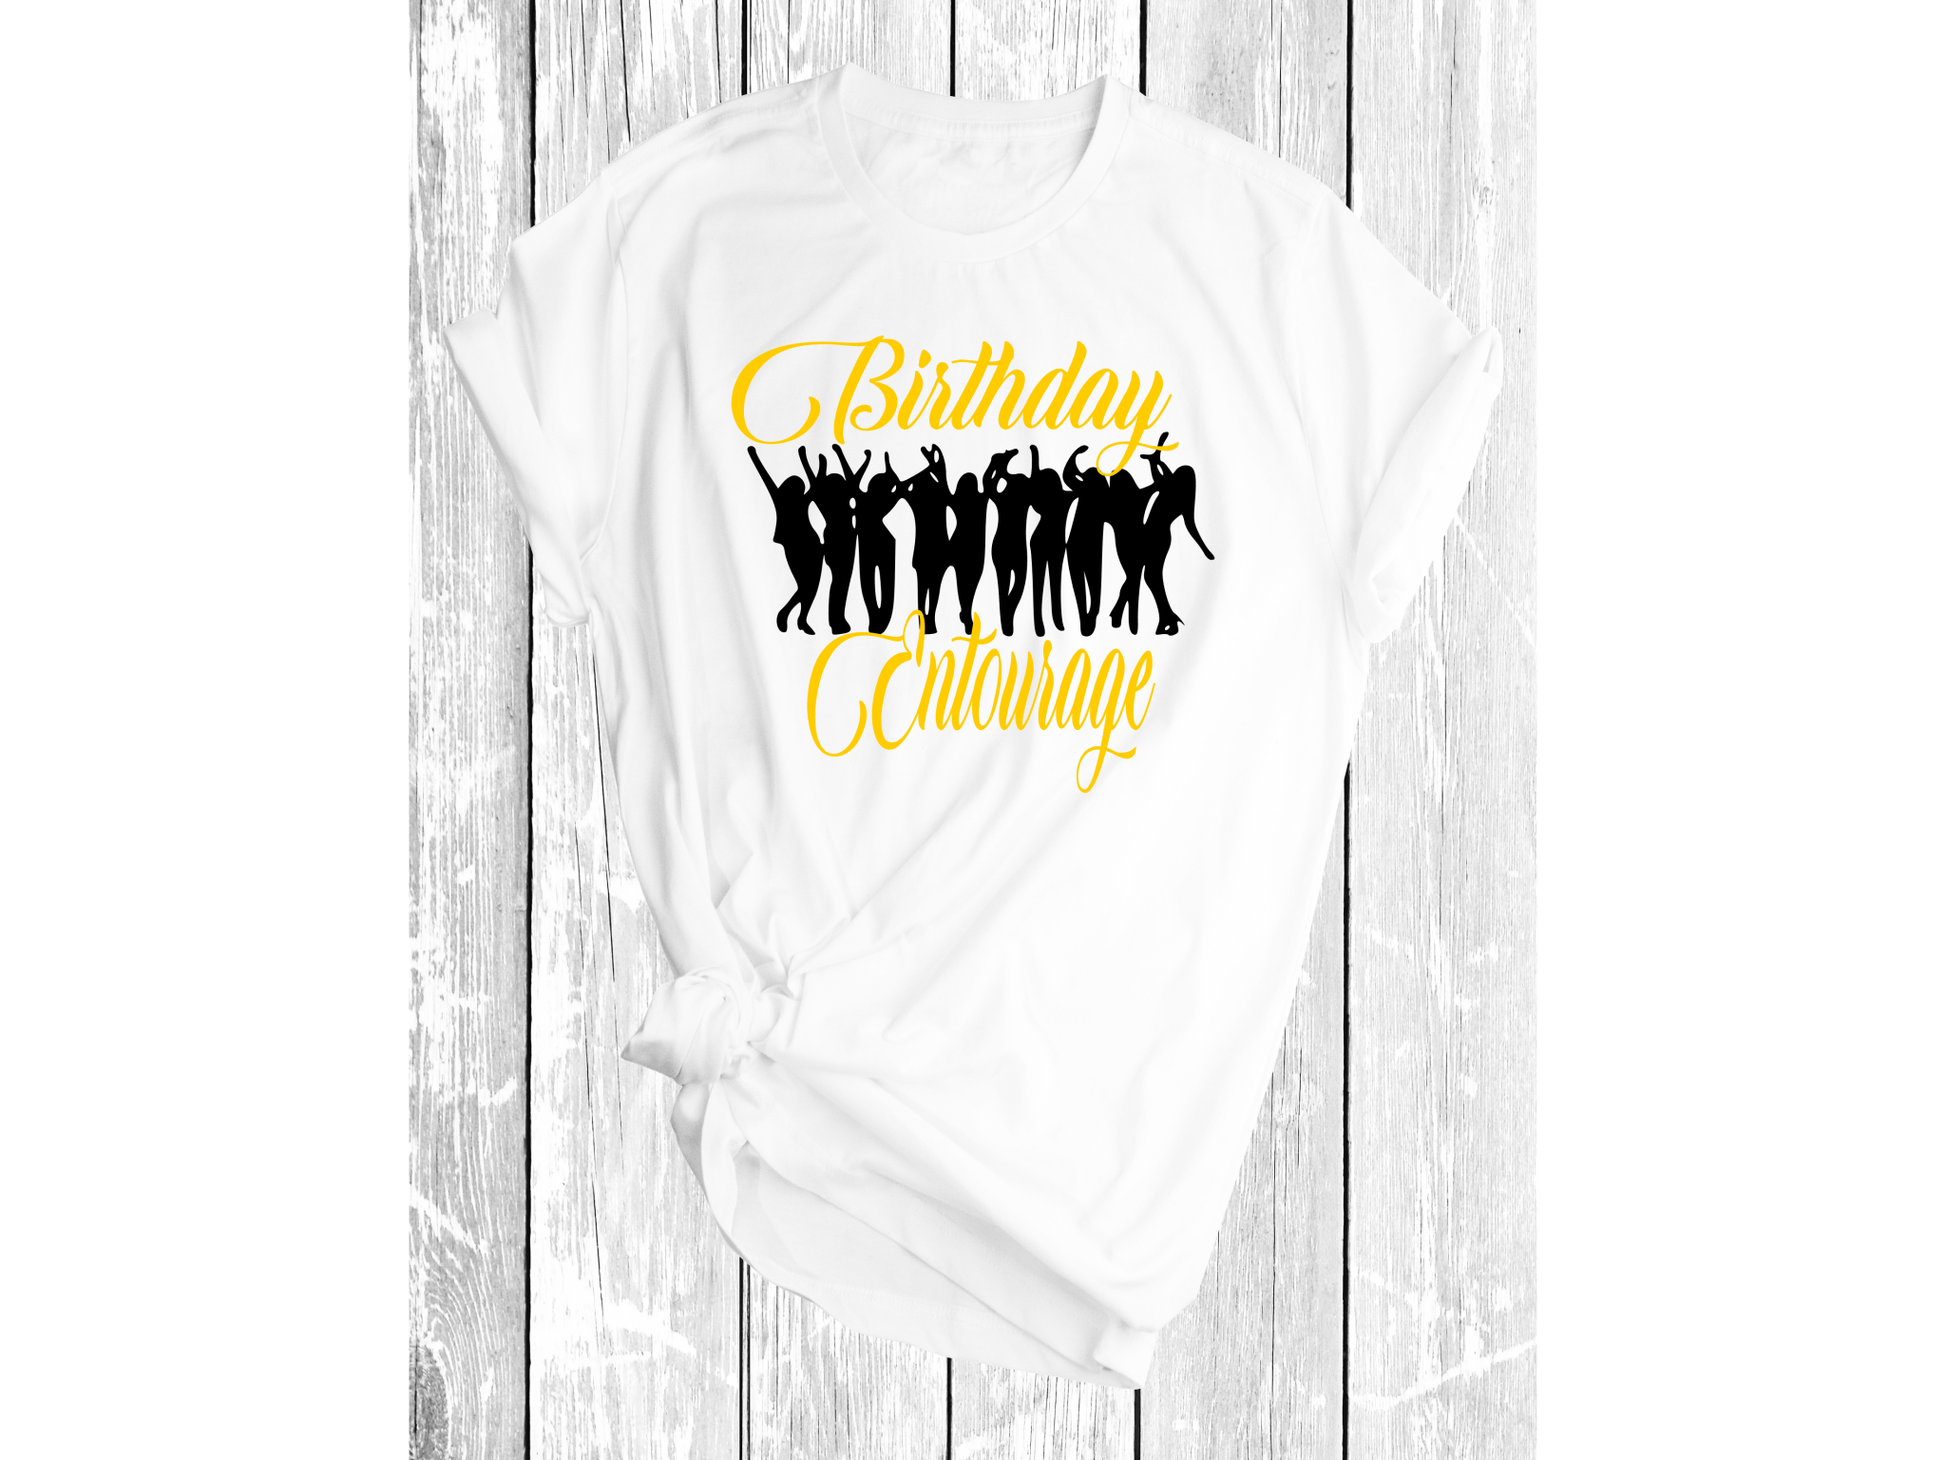 Birthday Entourage Shirt, Birthday Shirt For Women - smuniqueshirts